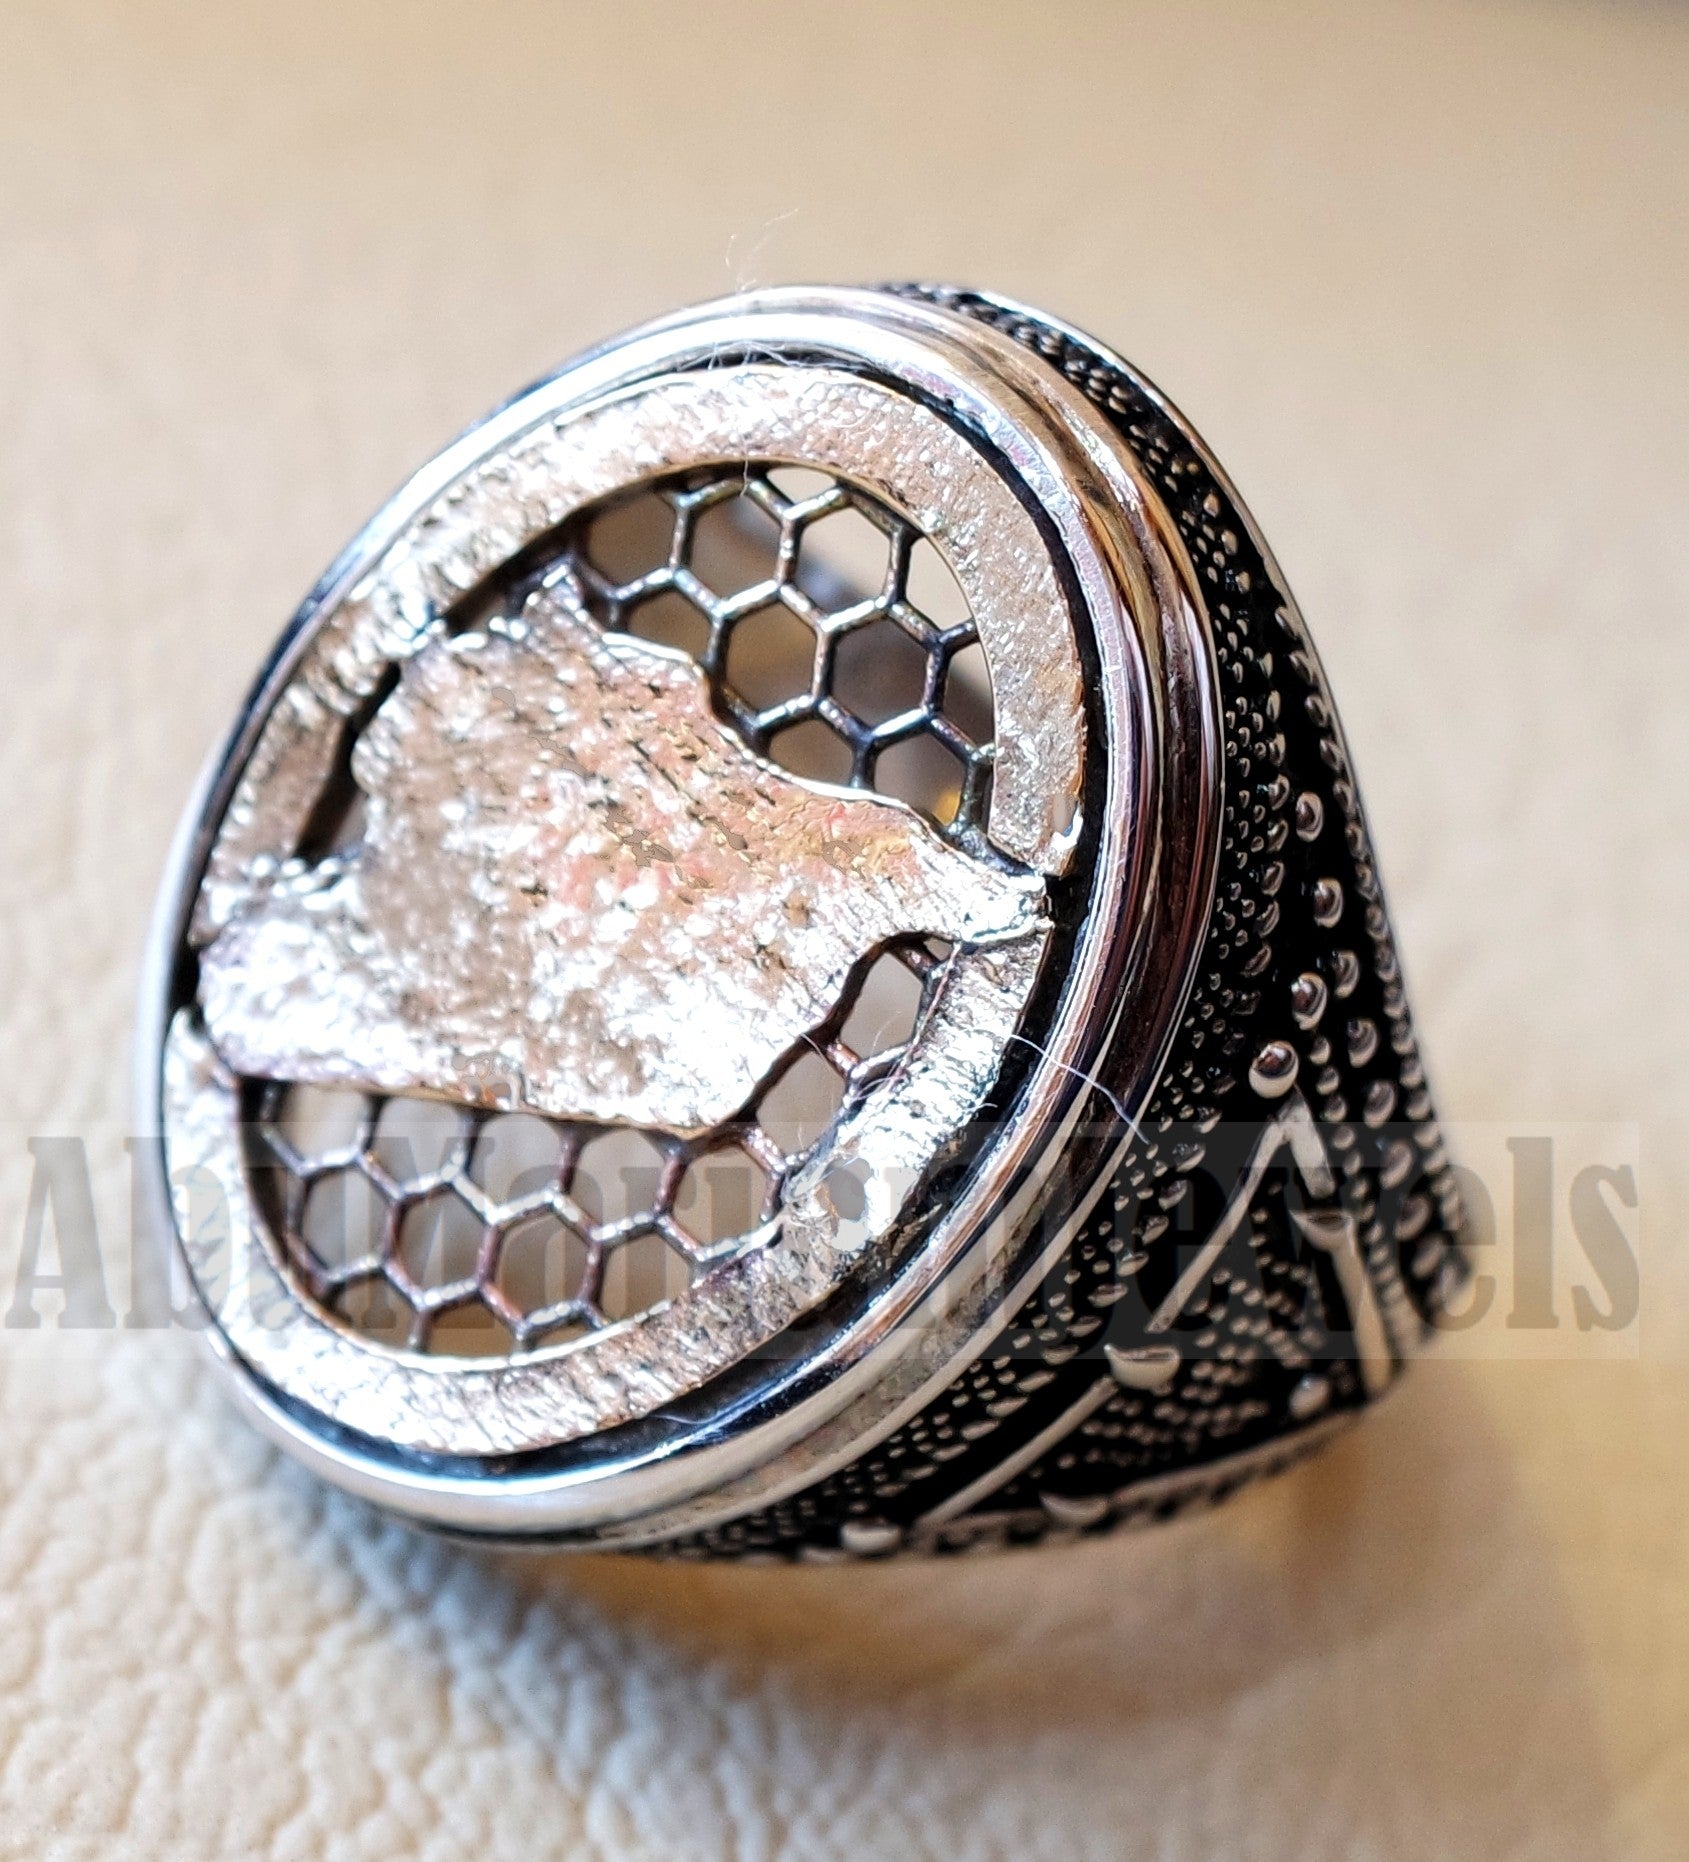 Zaman's authentic ring stone's